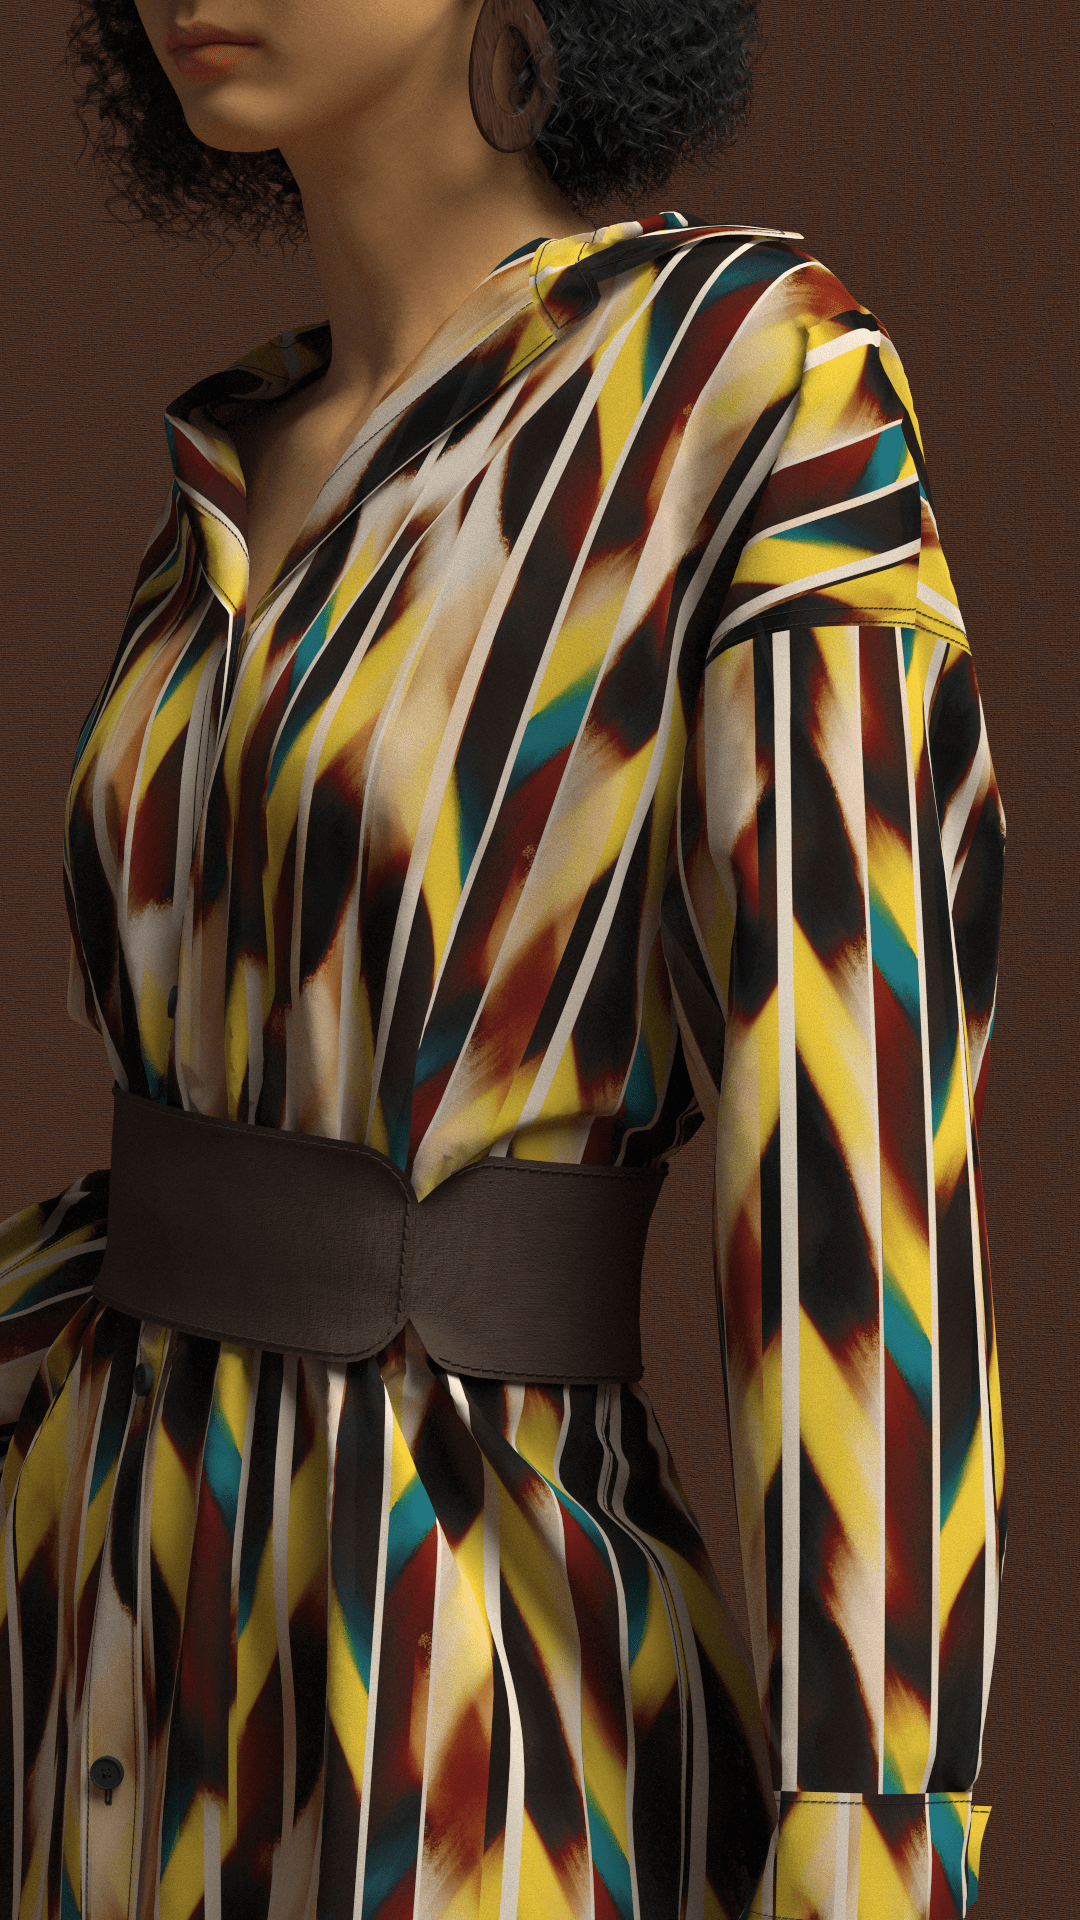 Fashion  textile design  surface pattern design  Digital Art  ILLUSTRATION  textile print abstract 3D